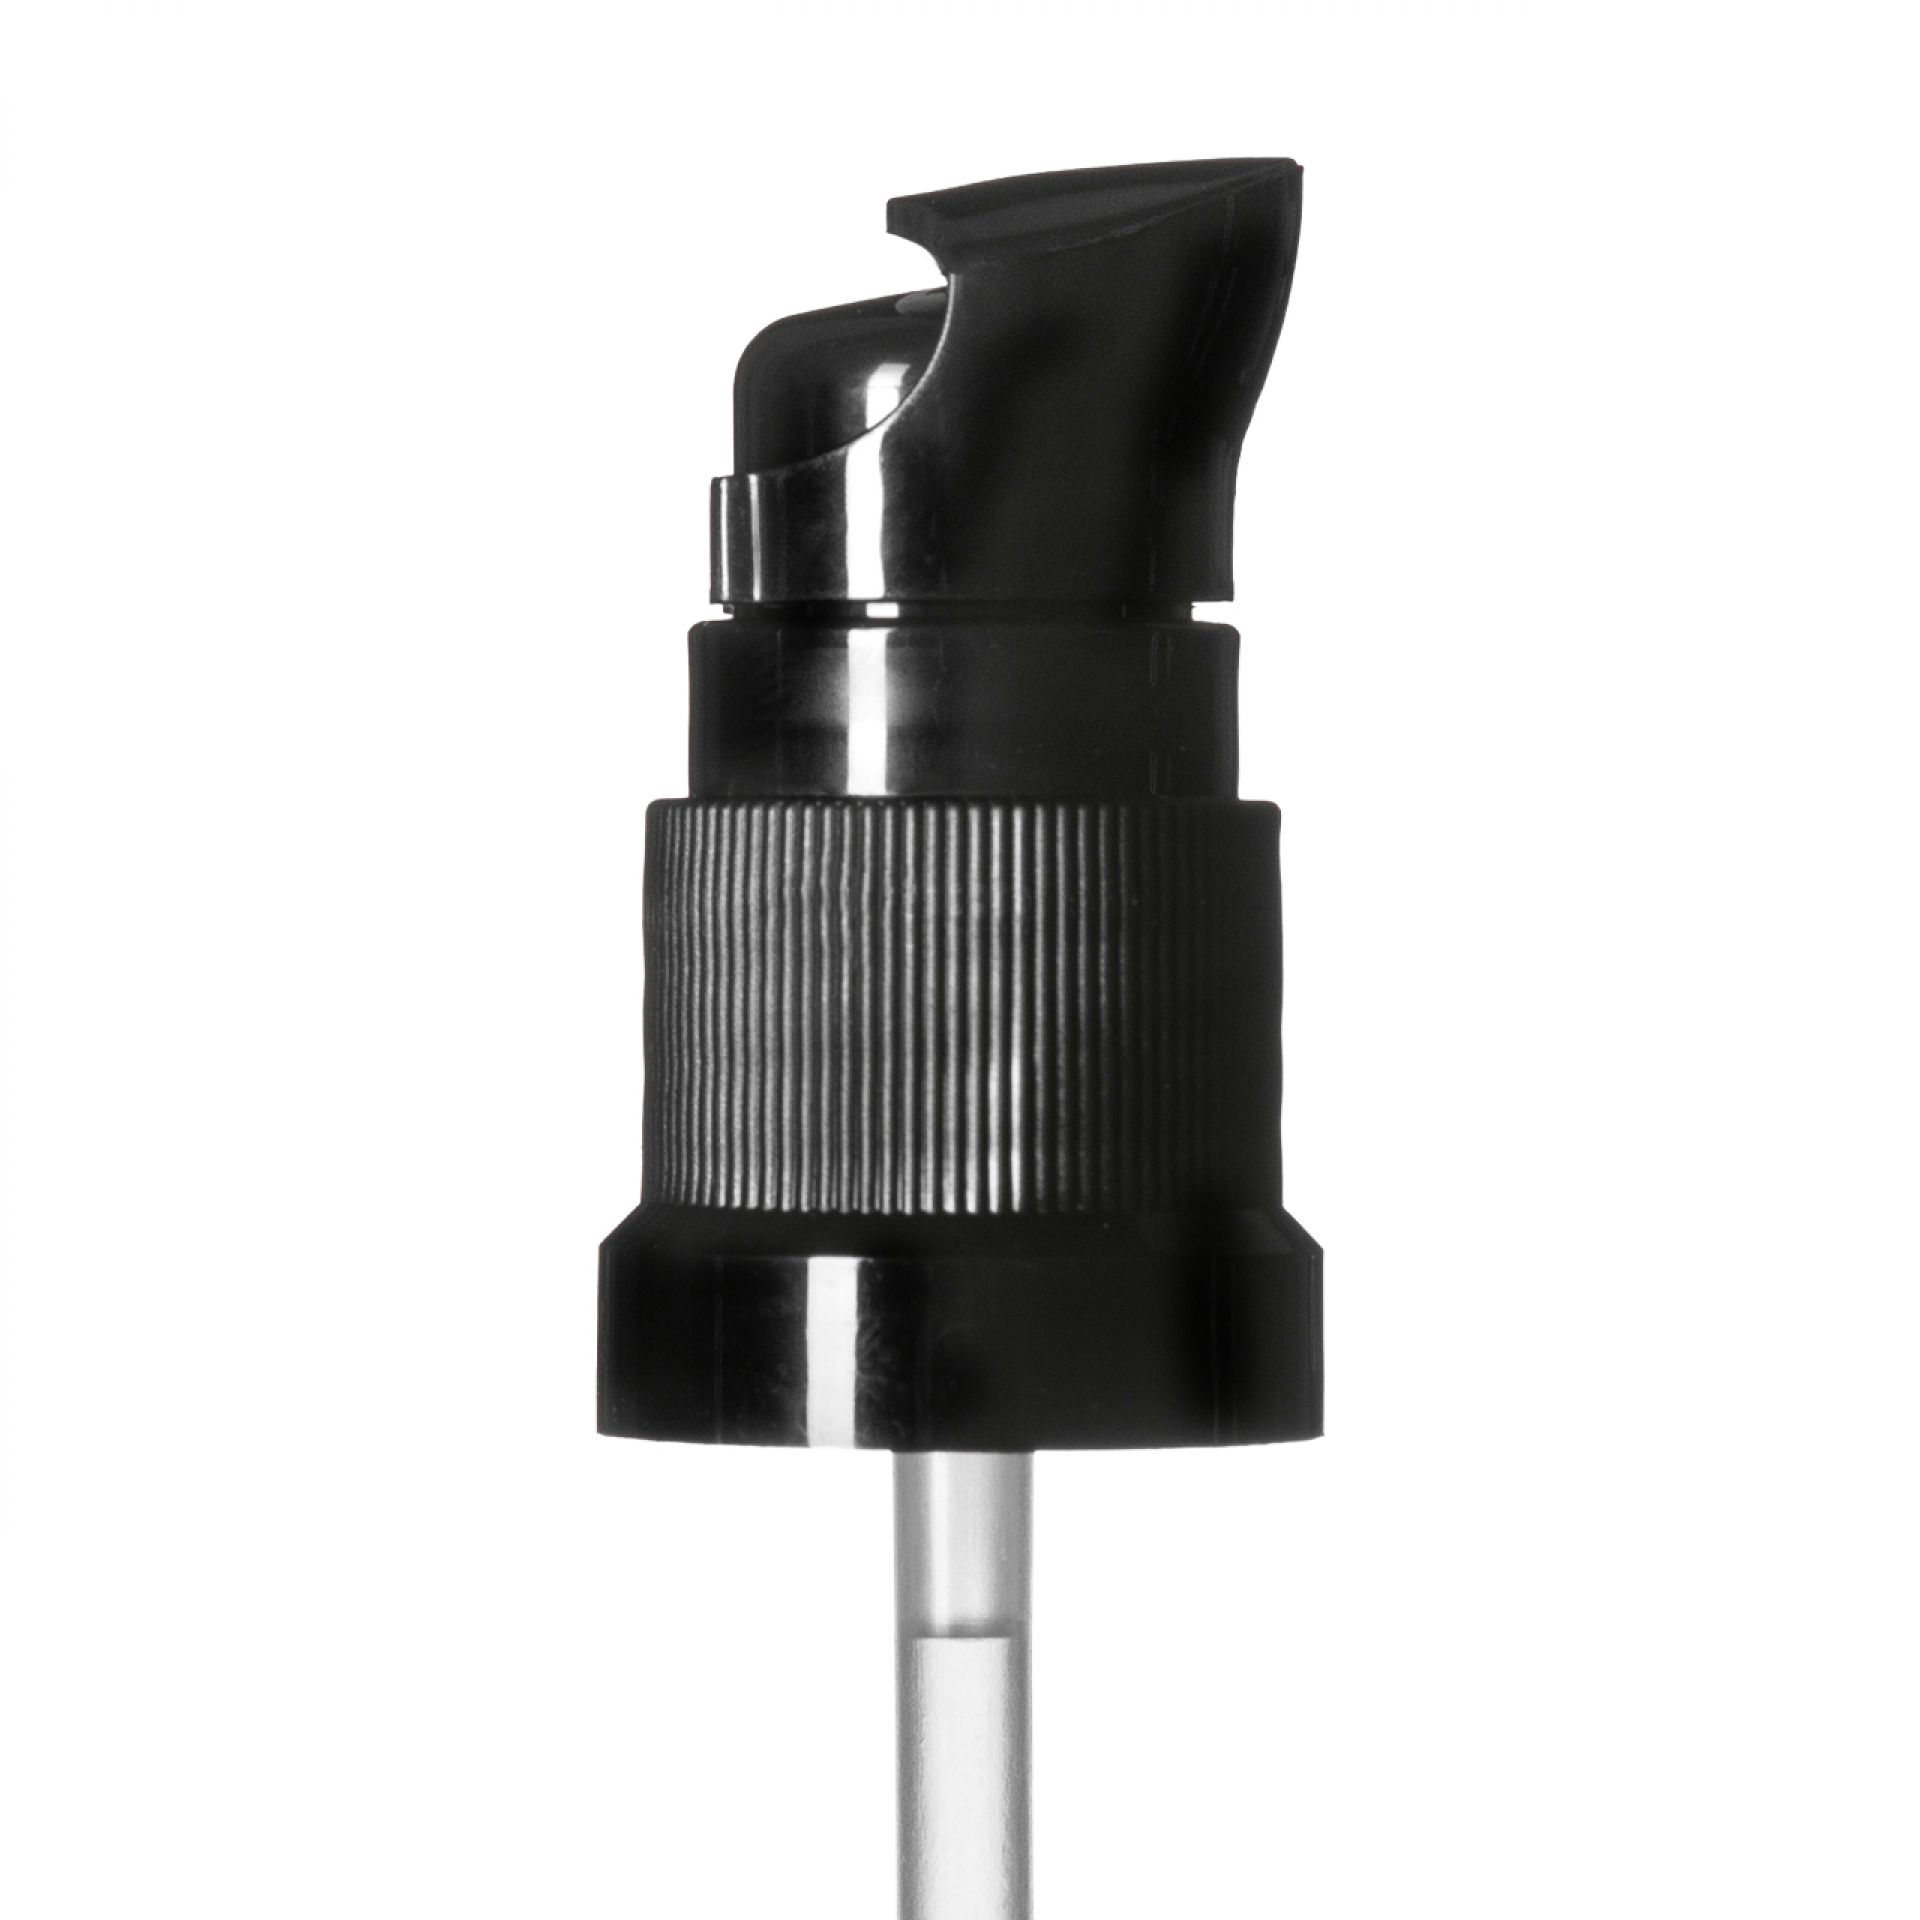 Lotion pump Metropolitan DIN18, PP, black, dose 0.10ml, black security clip (Orion 100)